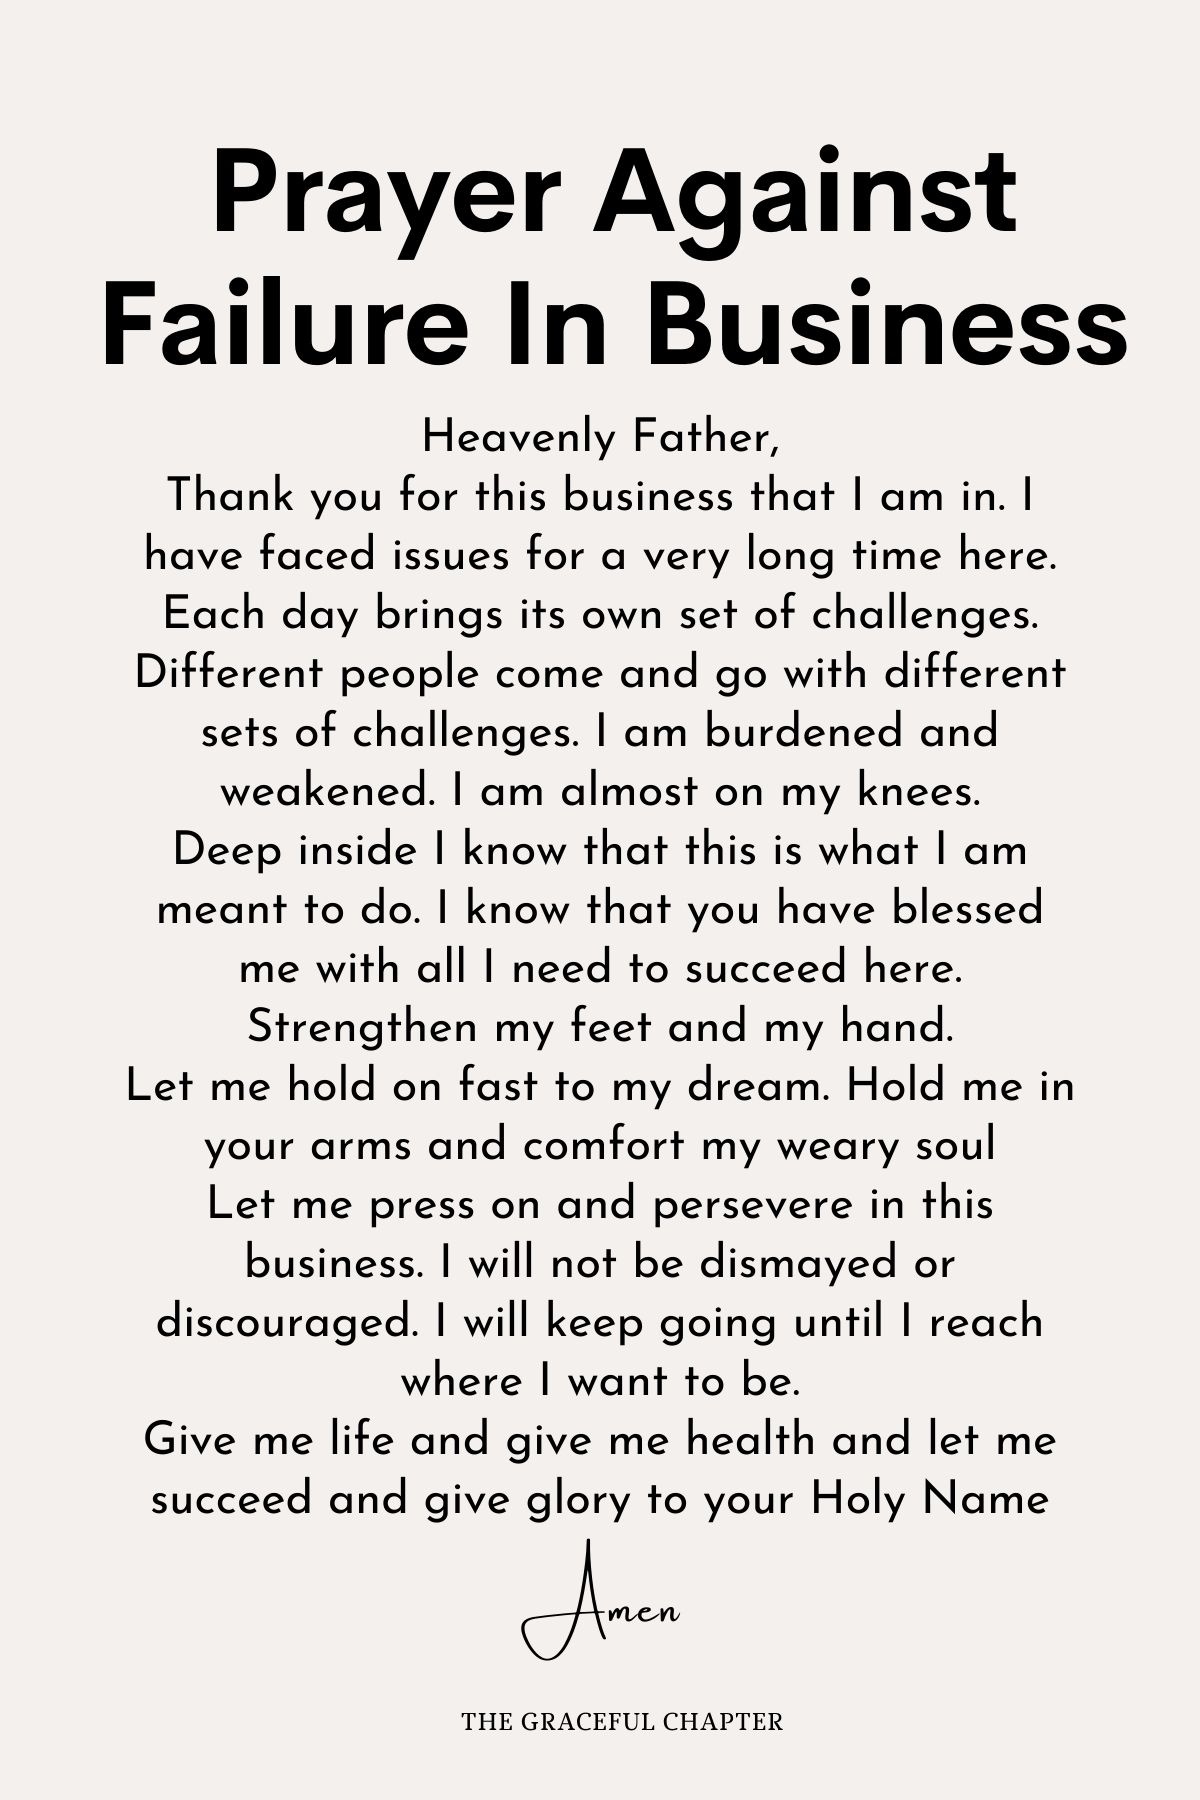 Prayer against failure in business